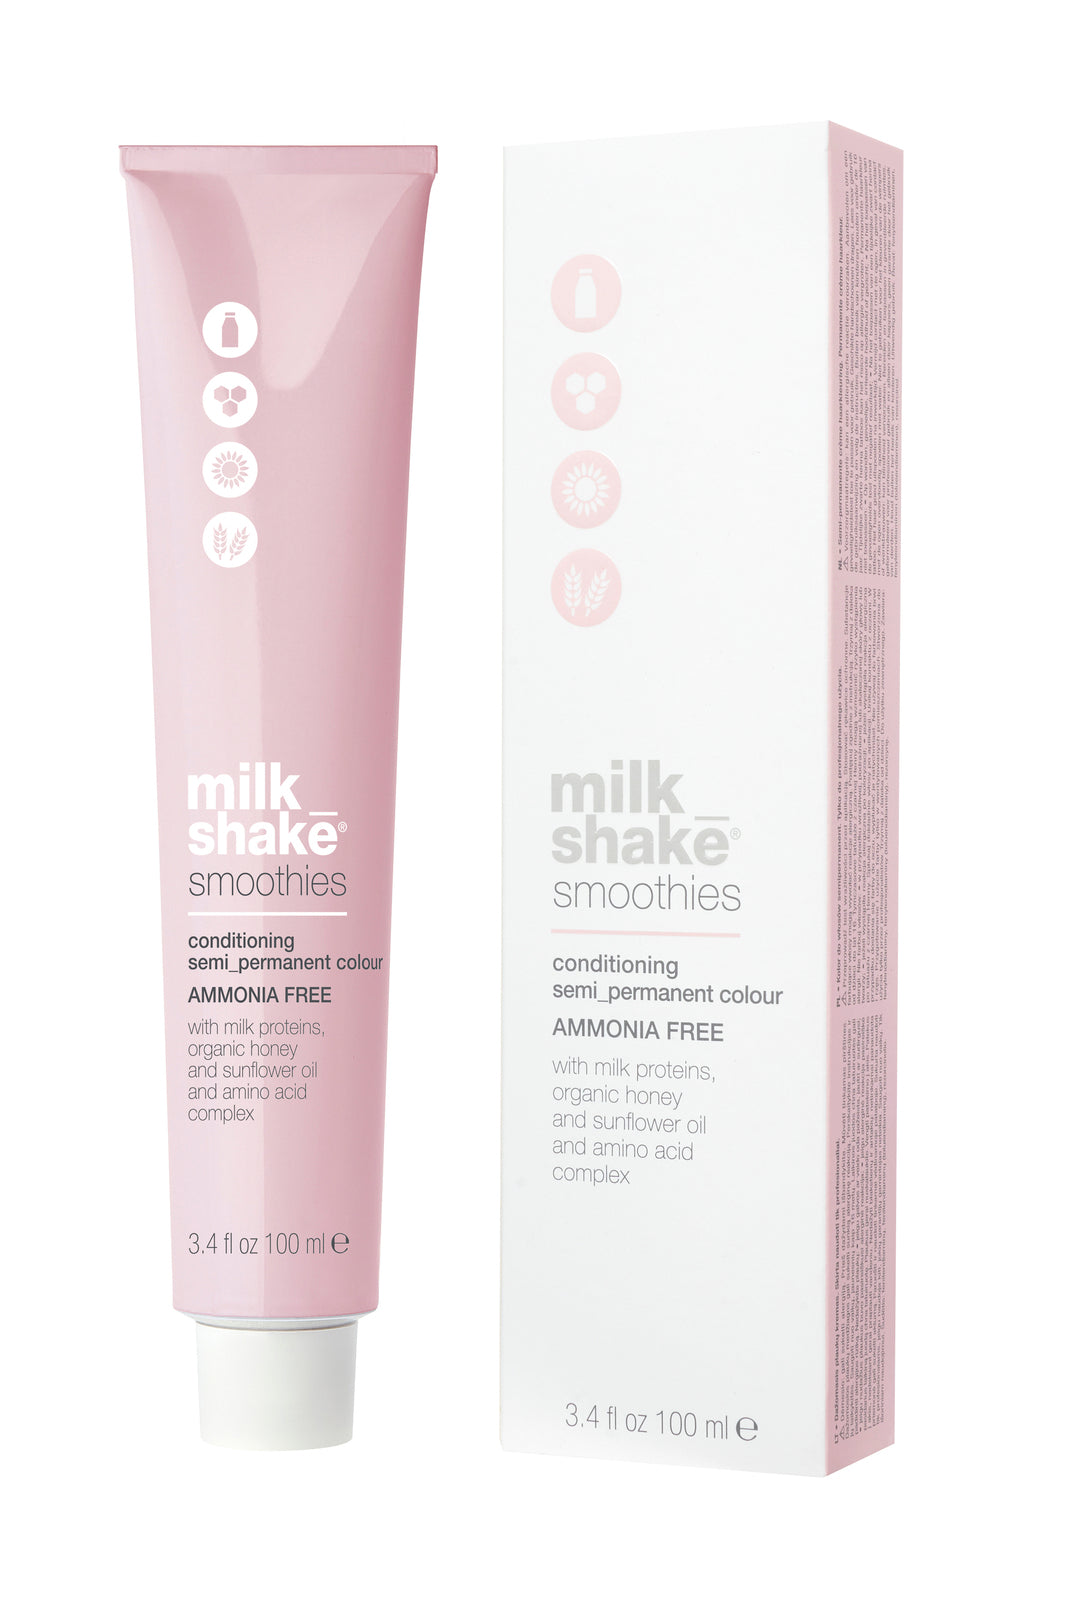 Milkshake smoothies semi-permanent color 4.41